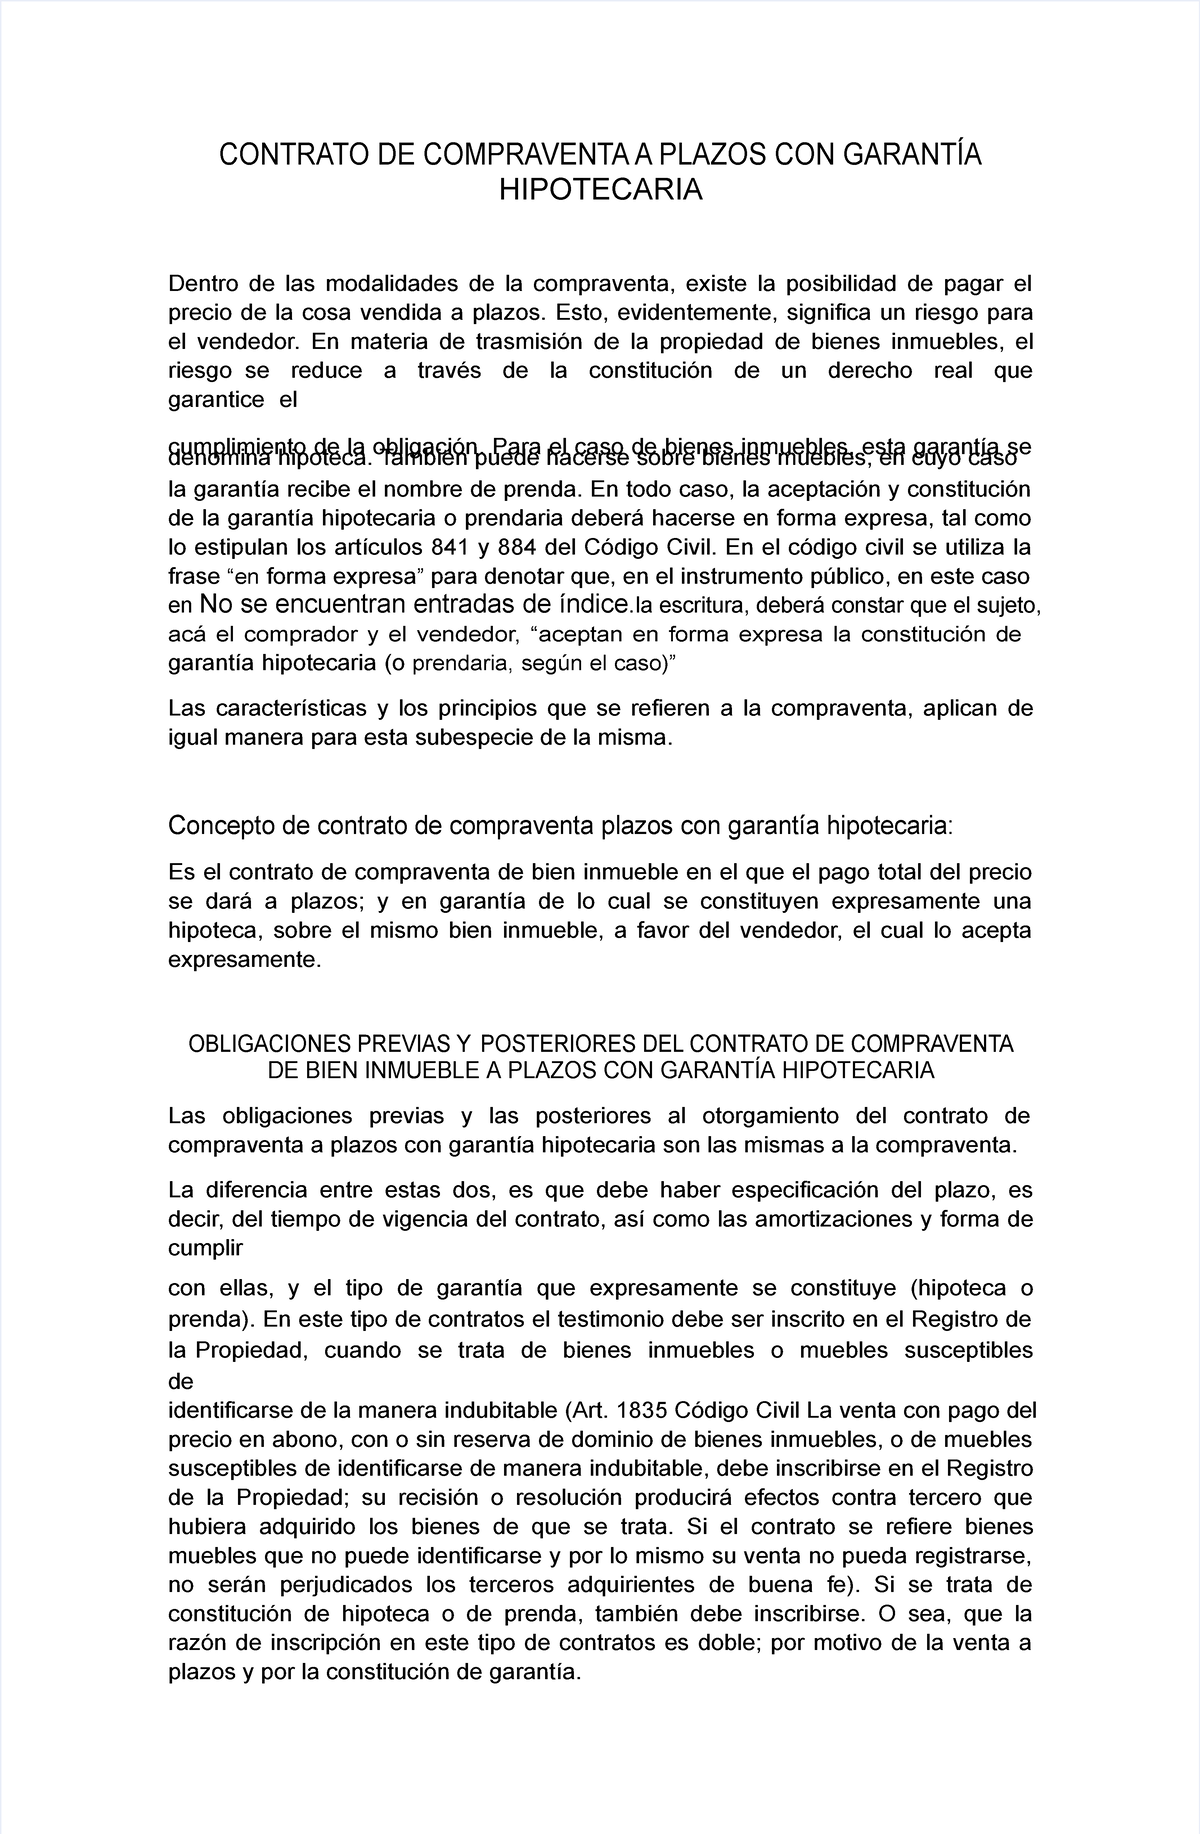 Pdf Contrato De Compraventa A Plazos Con Garantia Hipotecaria Contrato De Compraventa A Plazos 6558